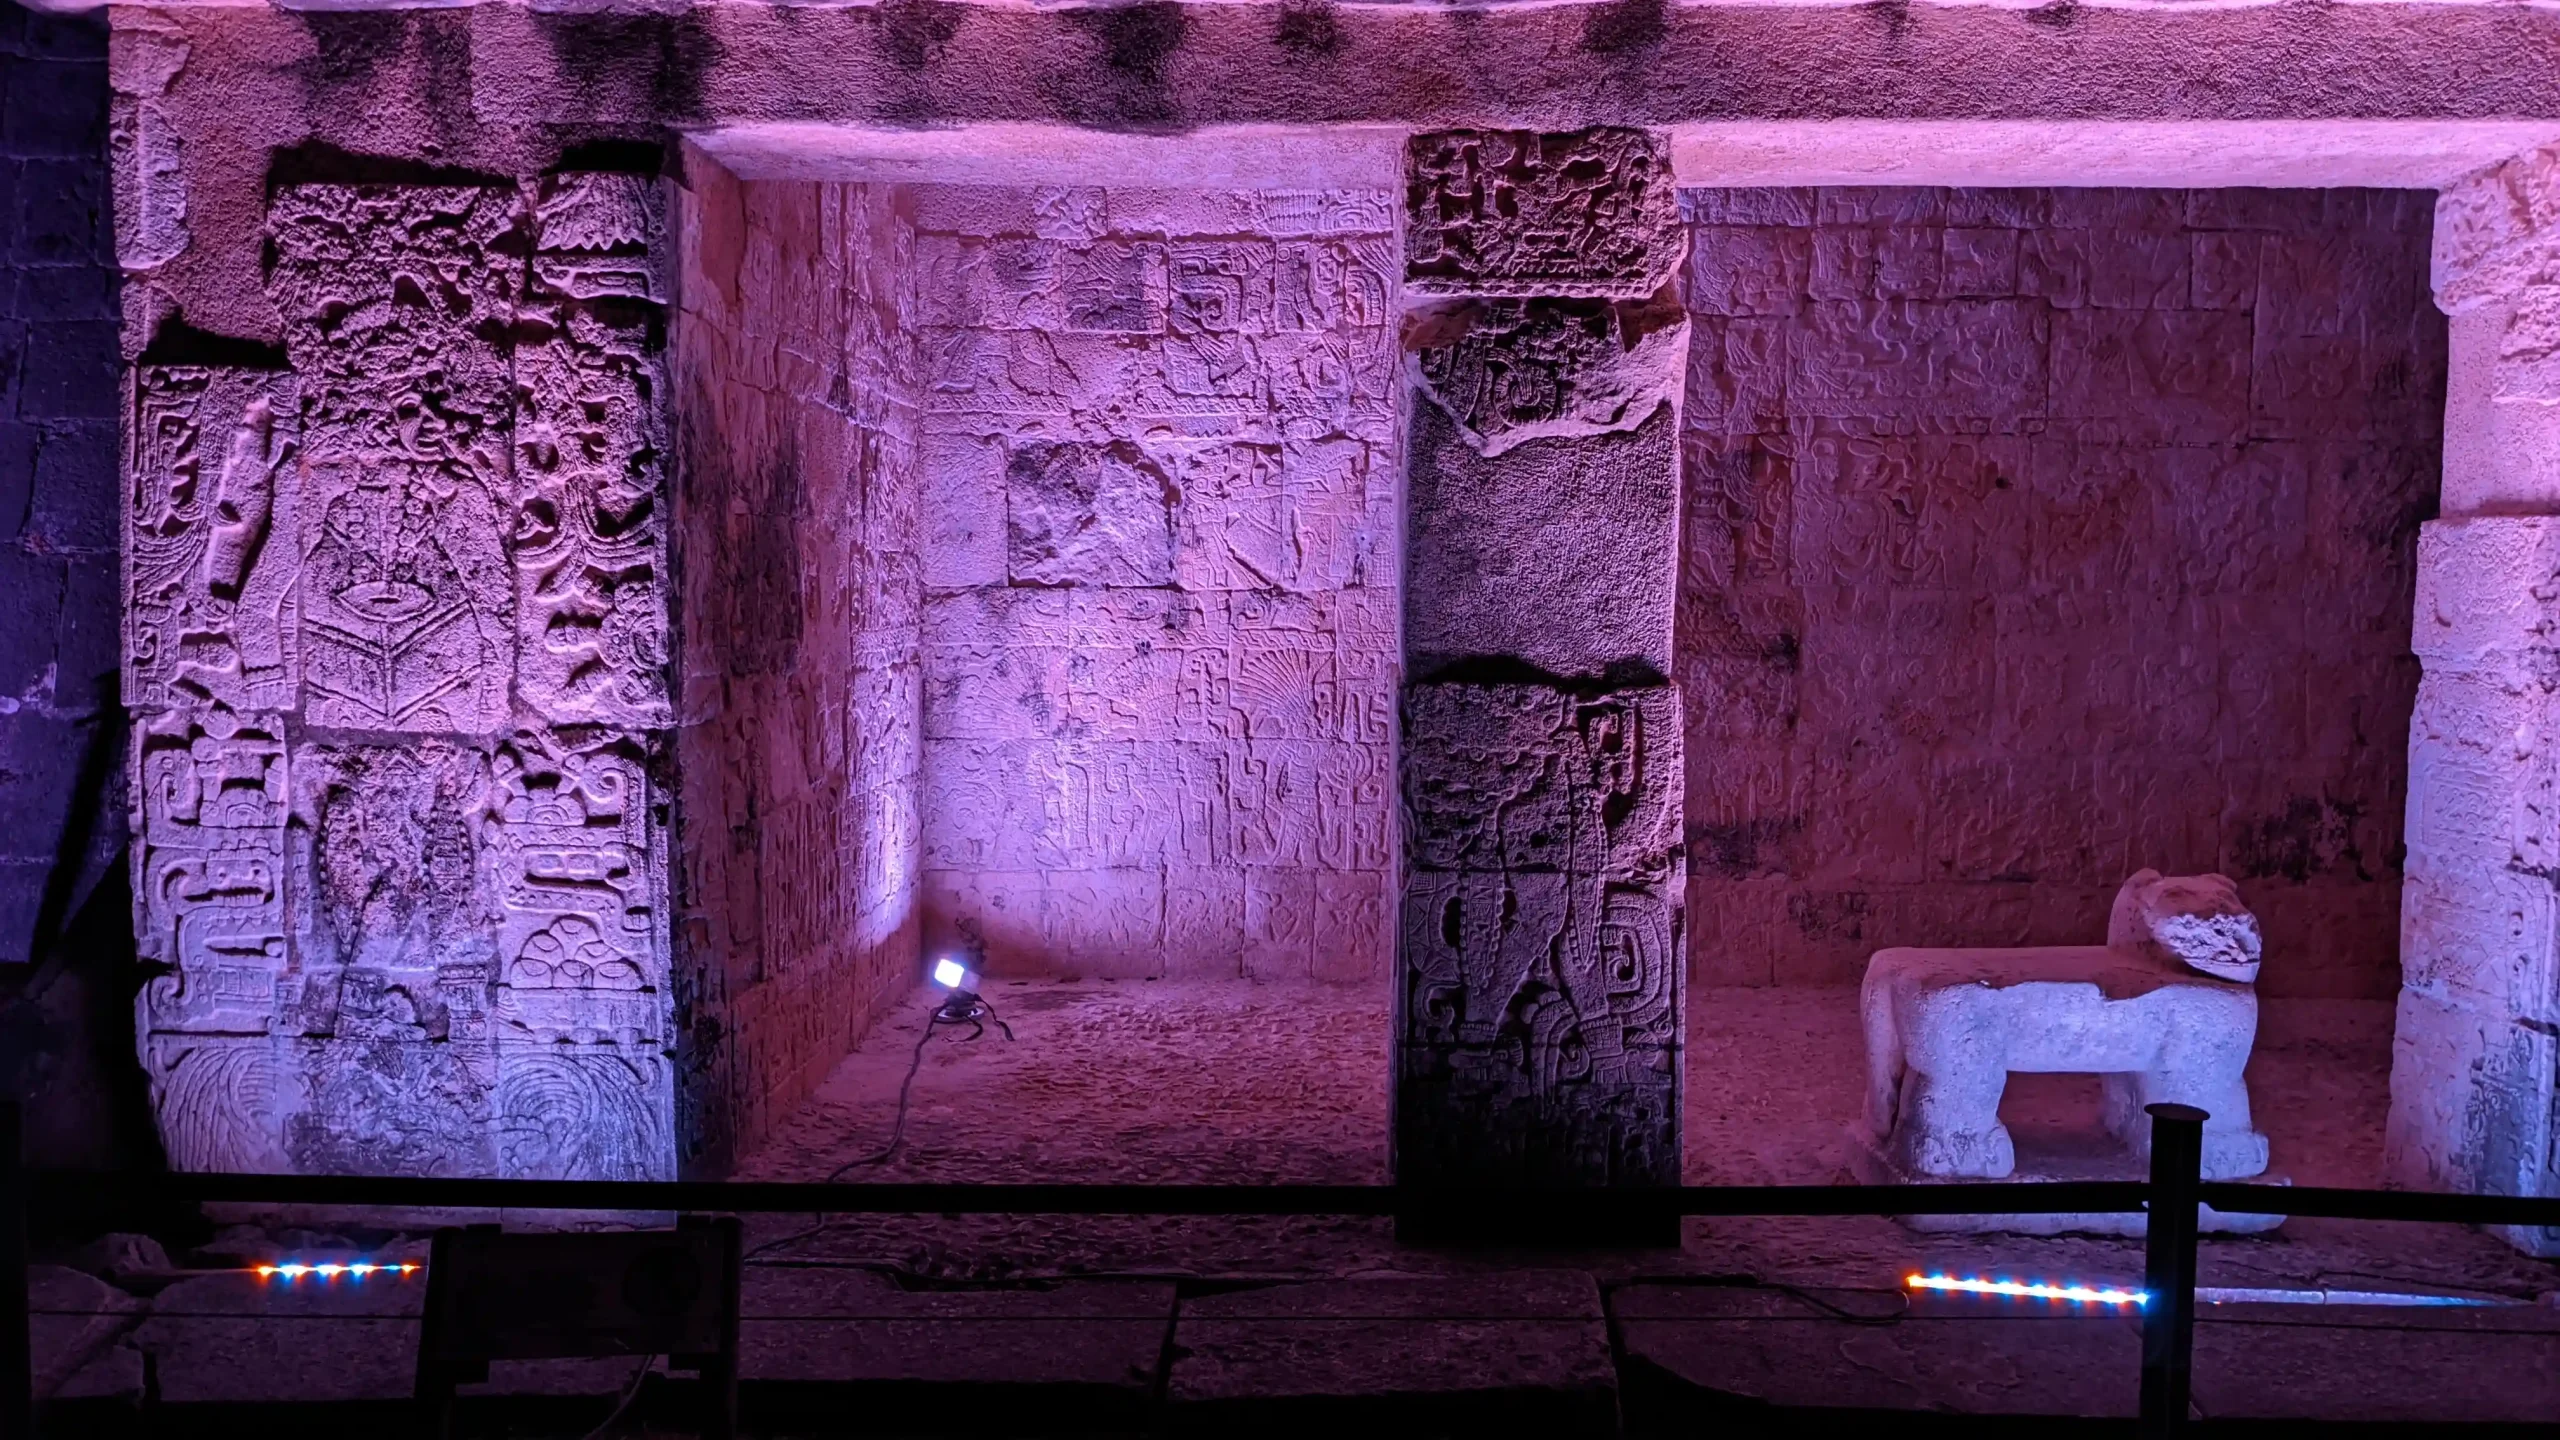 Chichen Itza at night: amazing history written in the walls